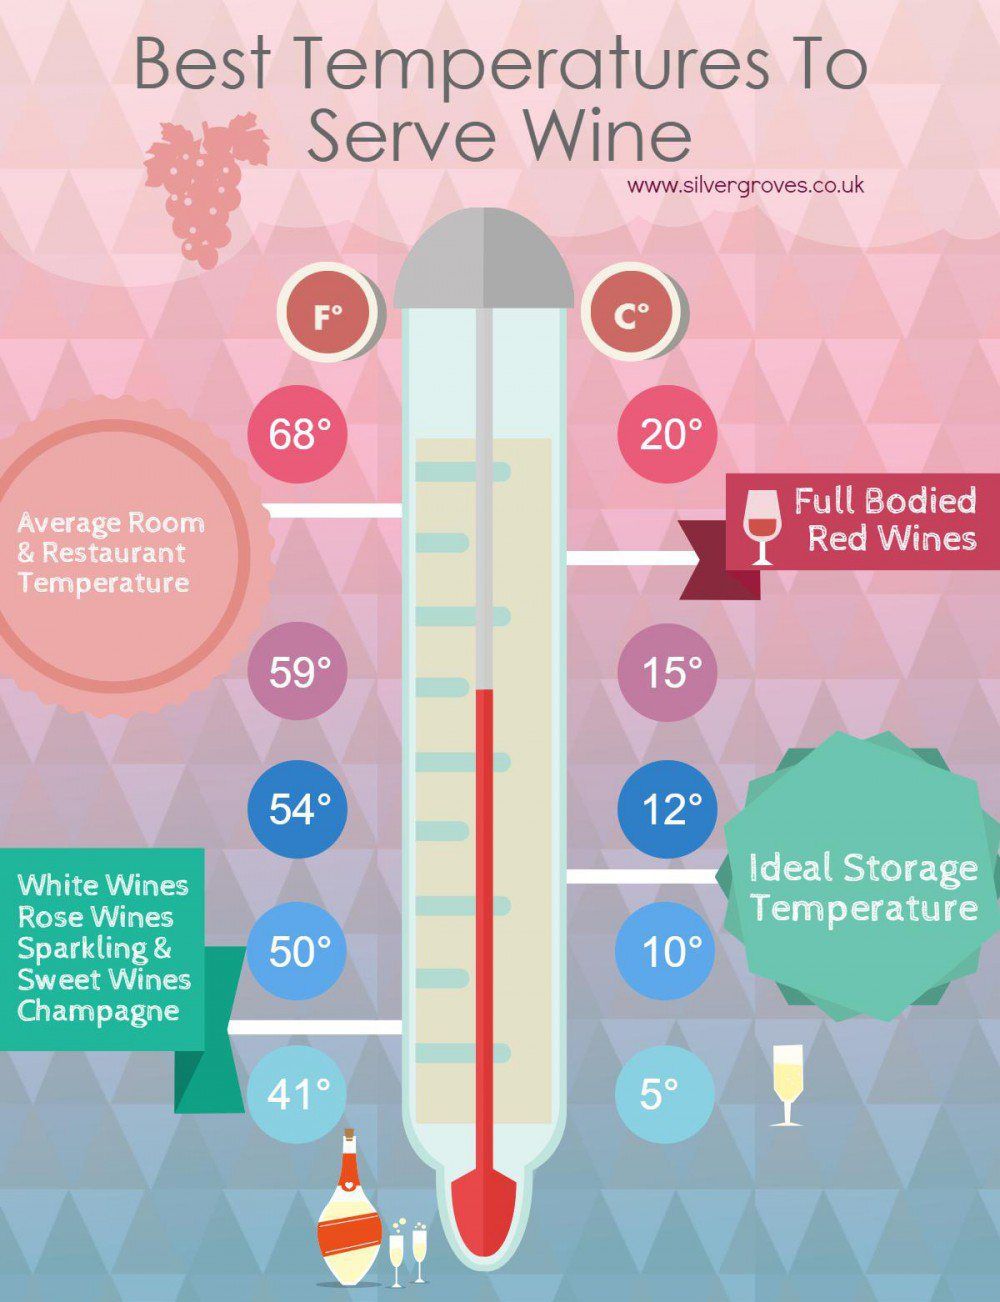 Wine Serving and Storage Temperatures 101